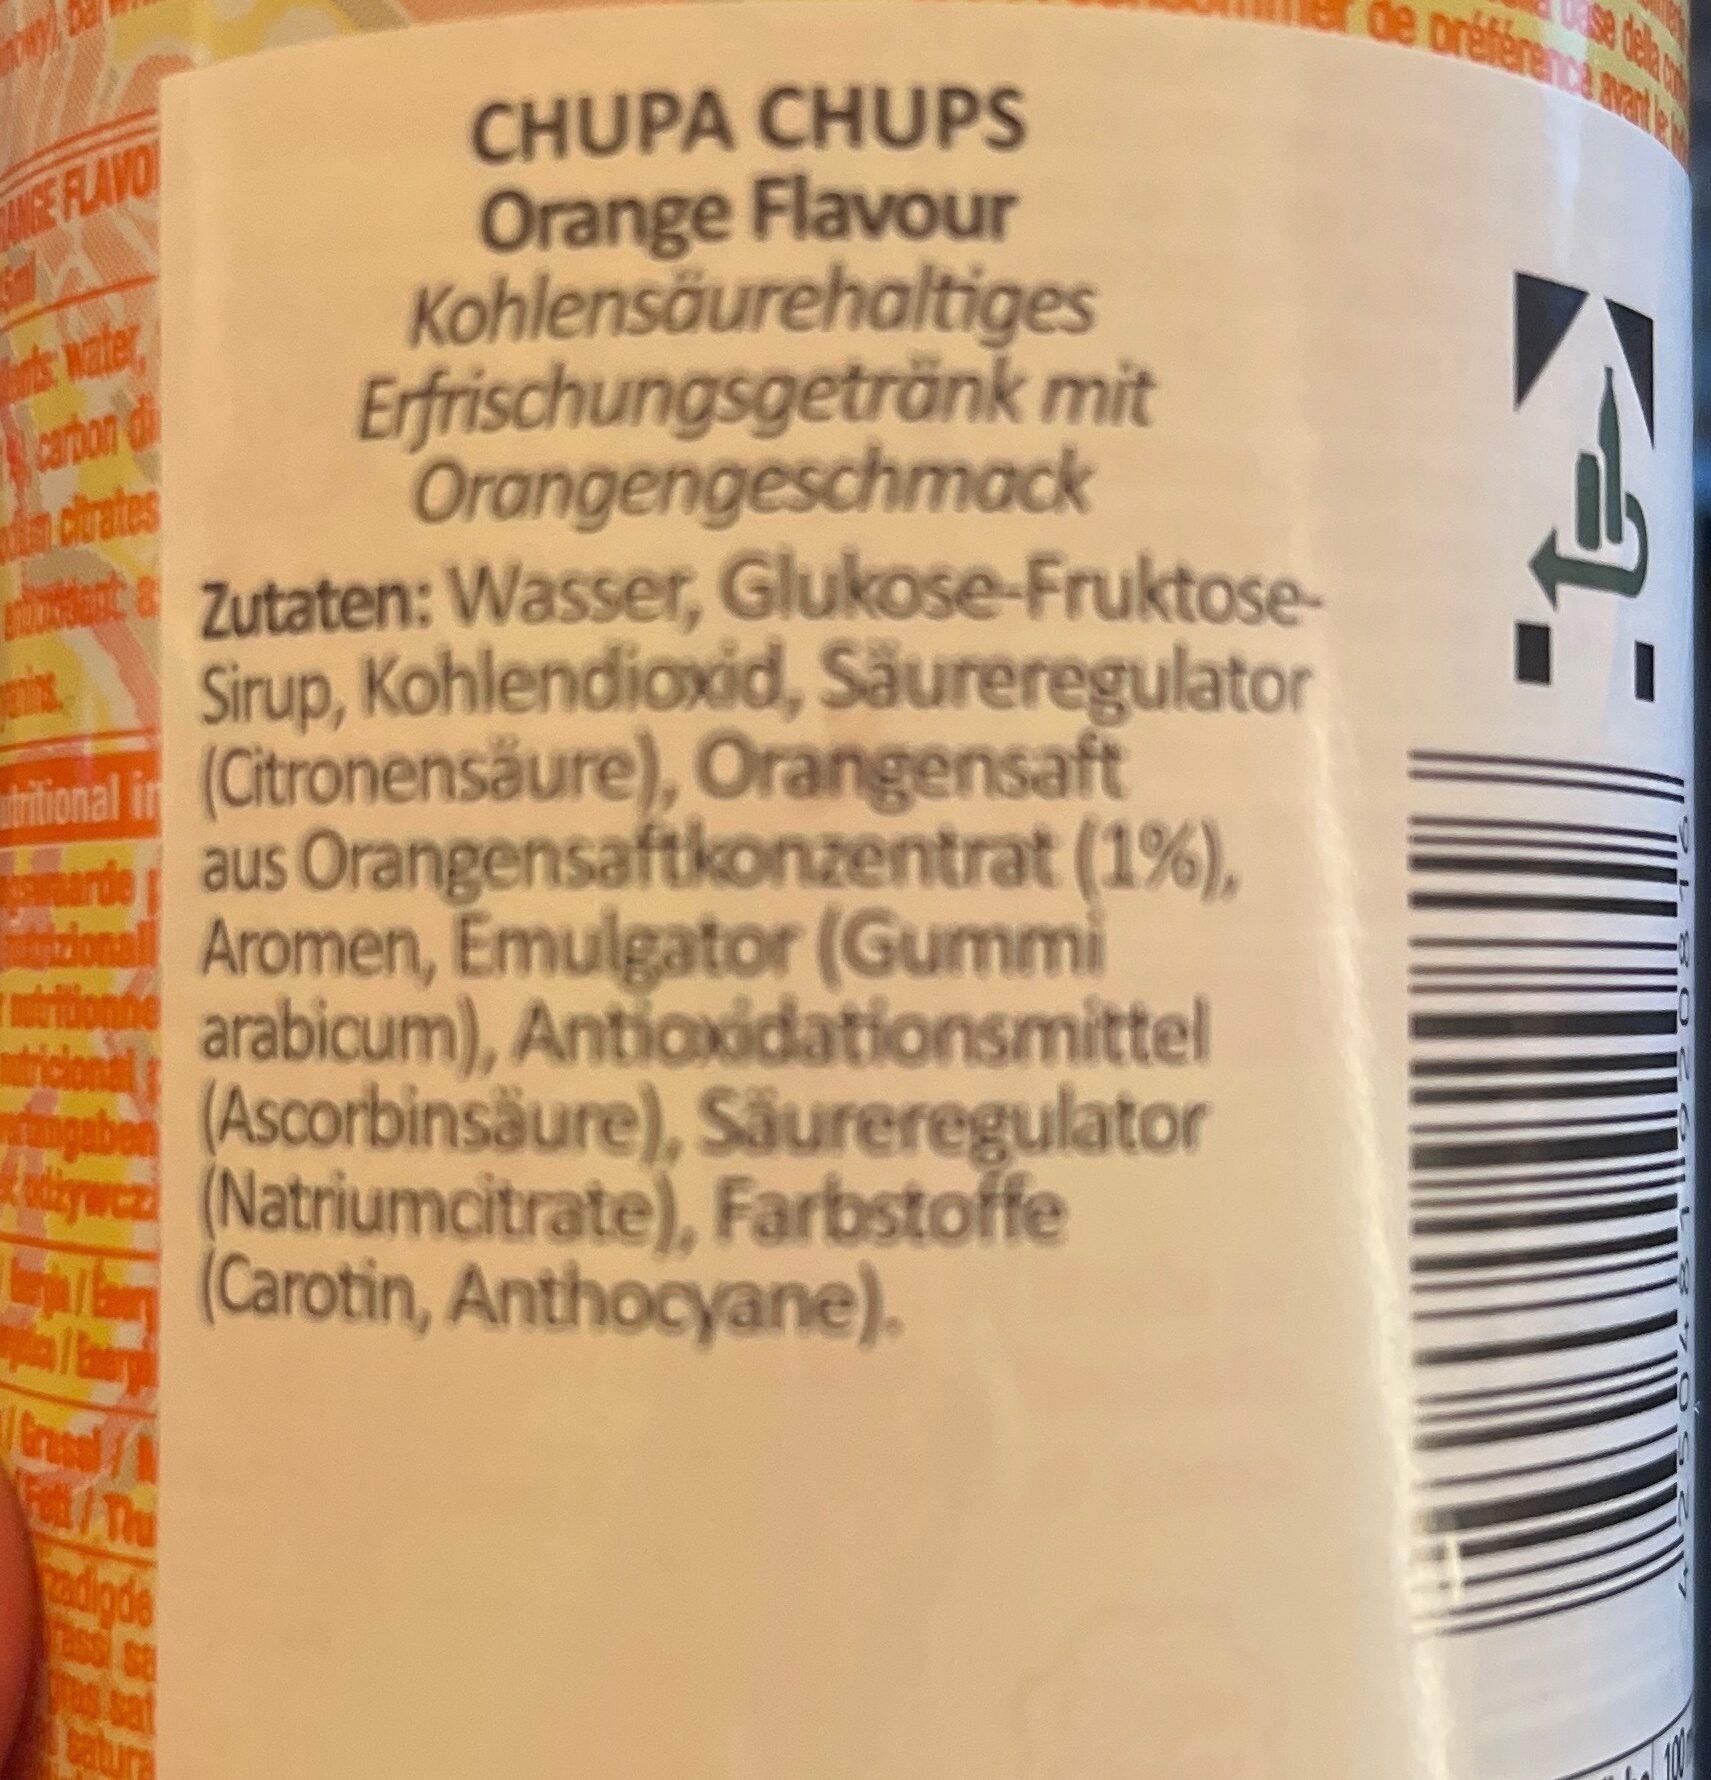 Chupa Chups Sparkling Orangengeschmack - Ingredients - de